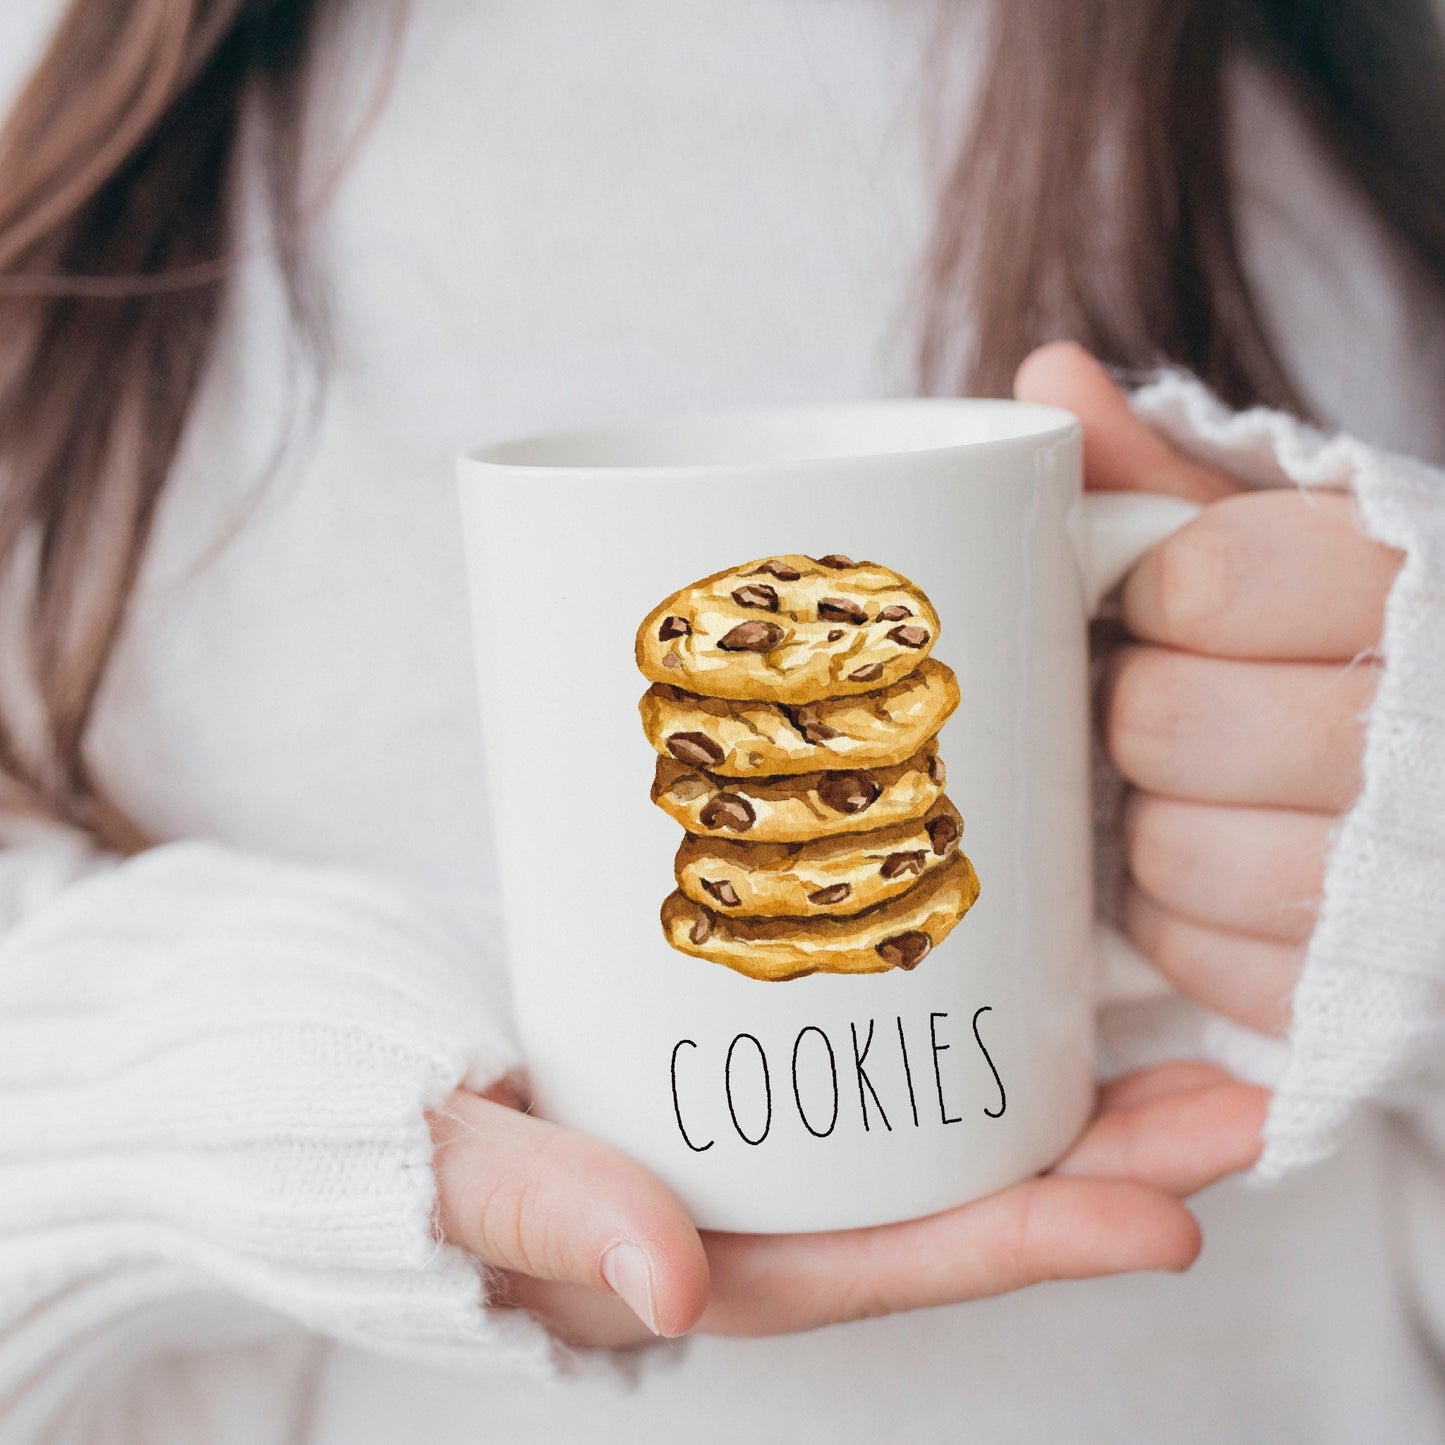 Cookies - White Glossy Mug